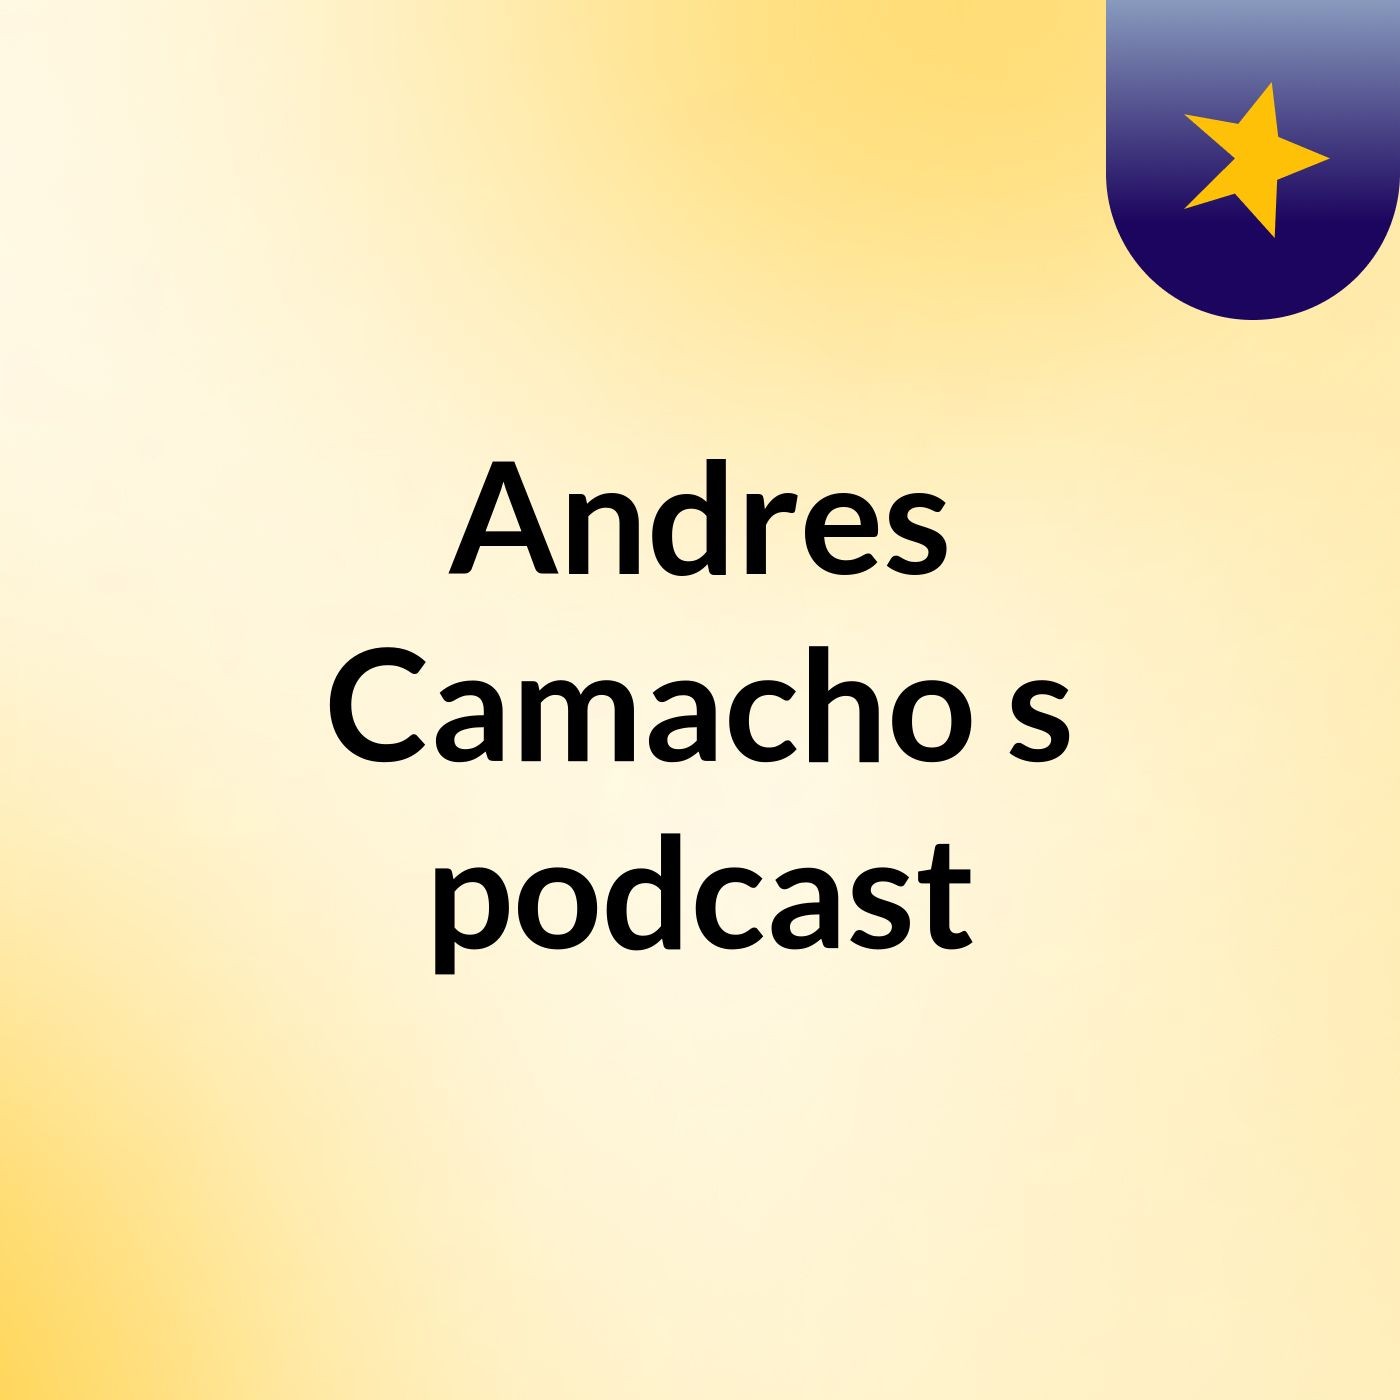 Andres Camacho's podcast